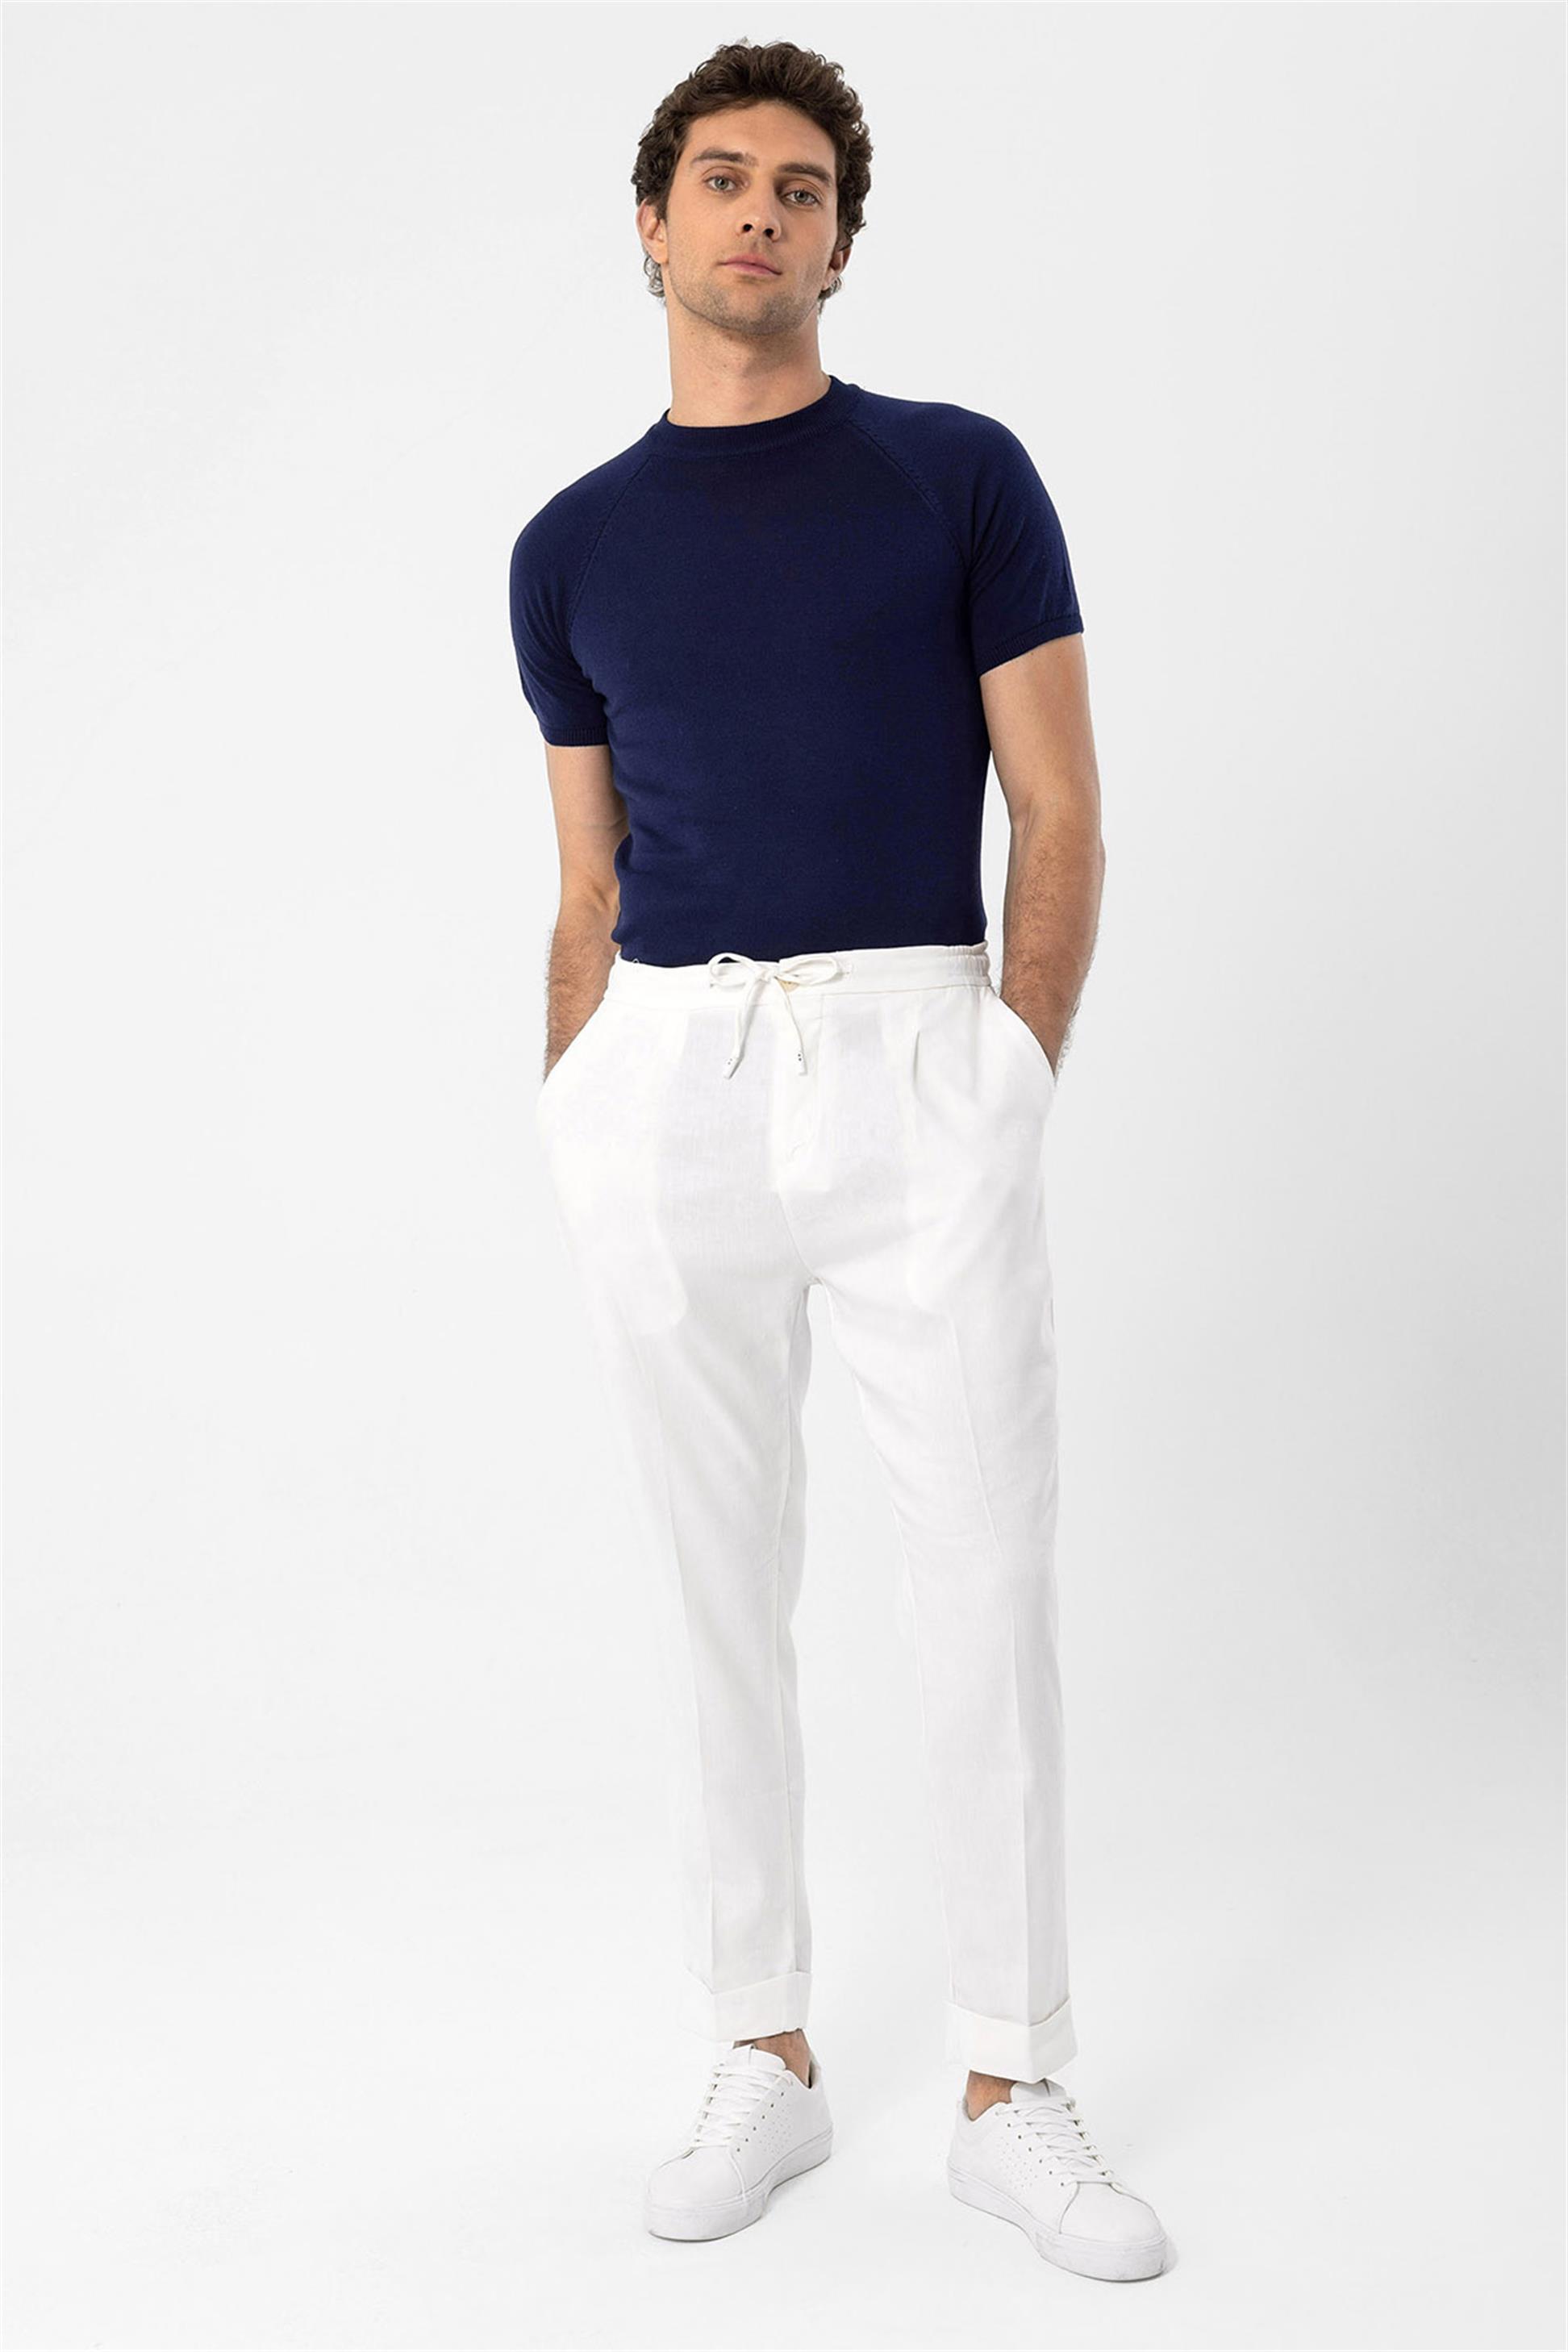 Linen Blend Men's Trousers with Drawstring Waist